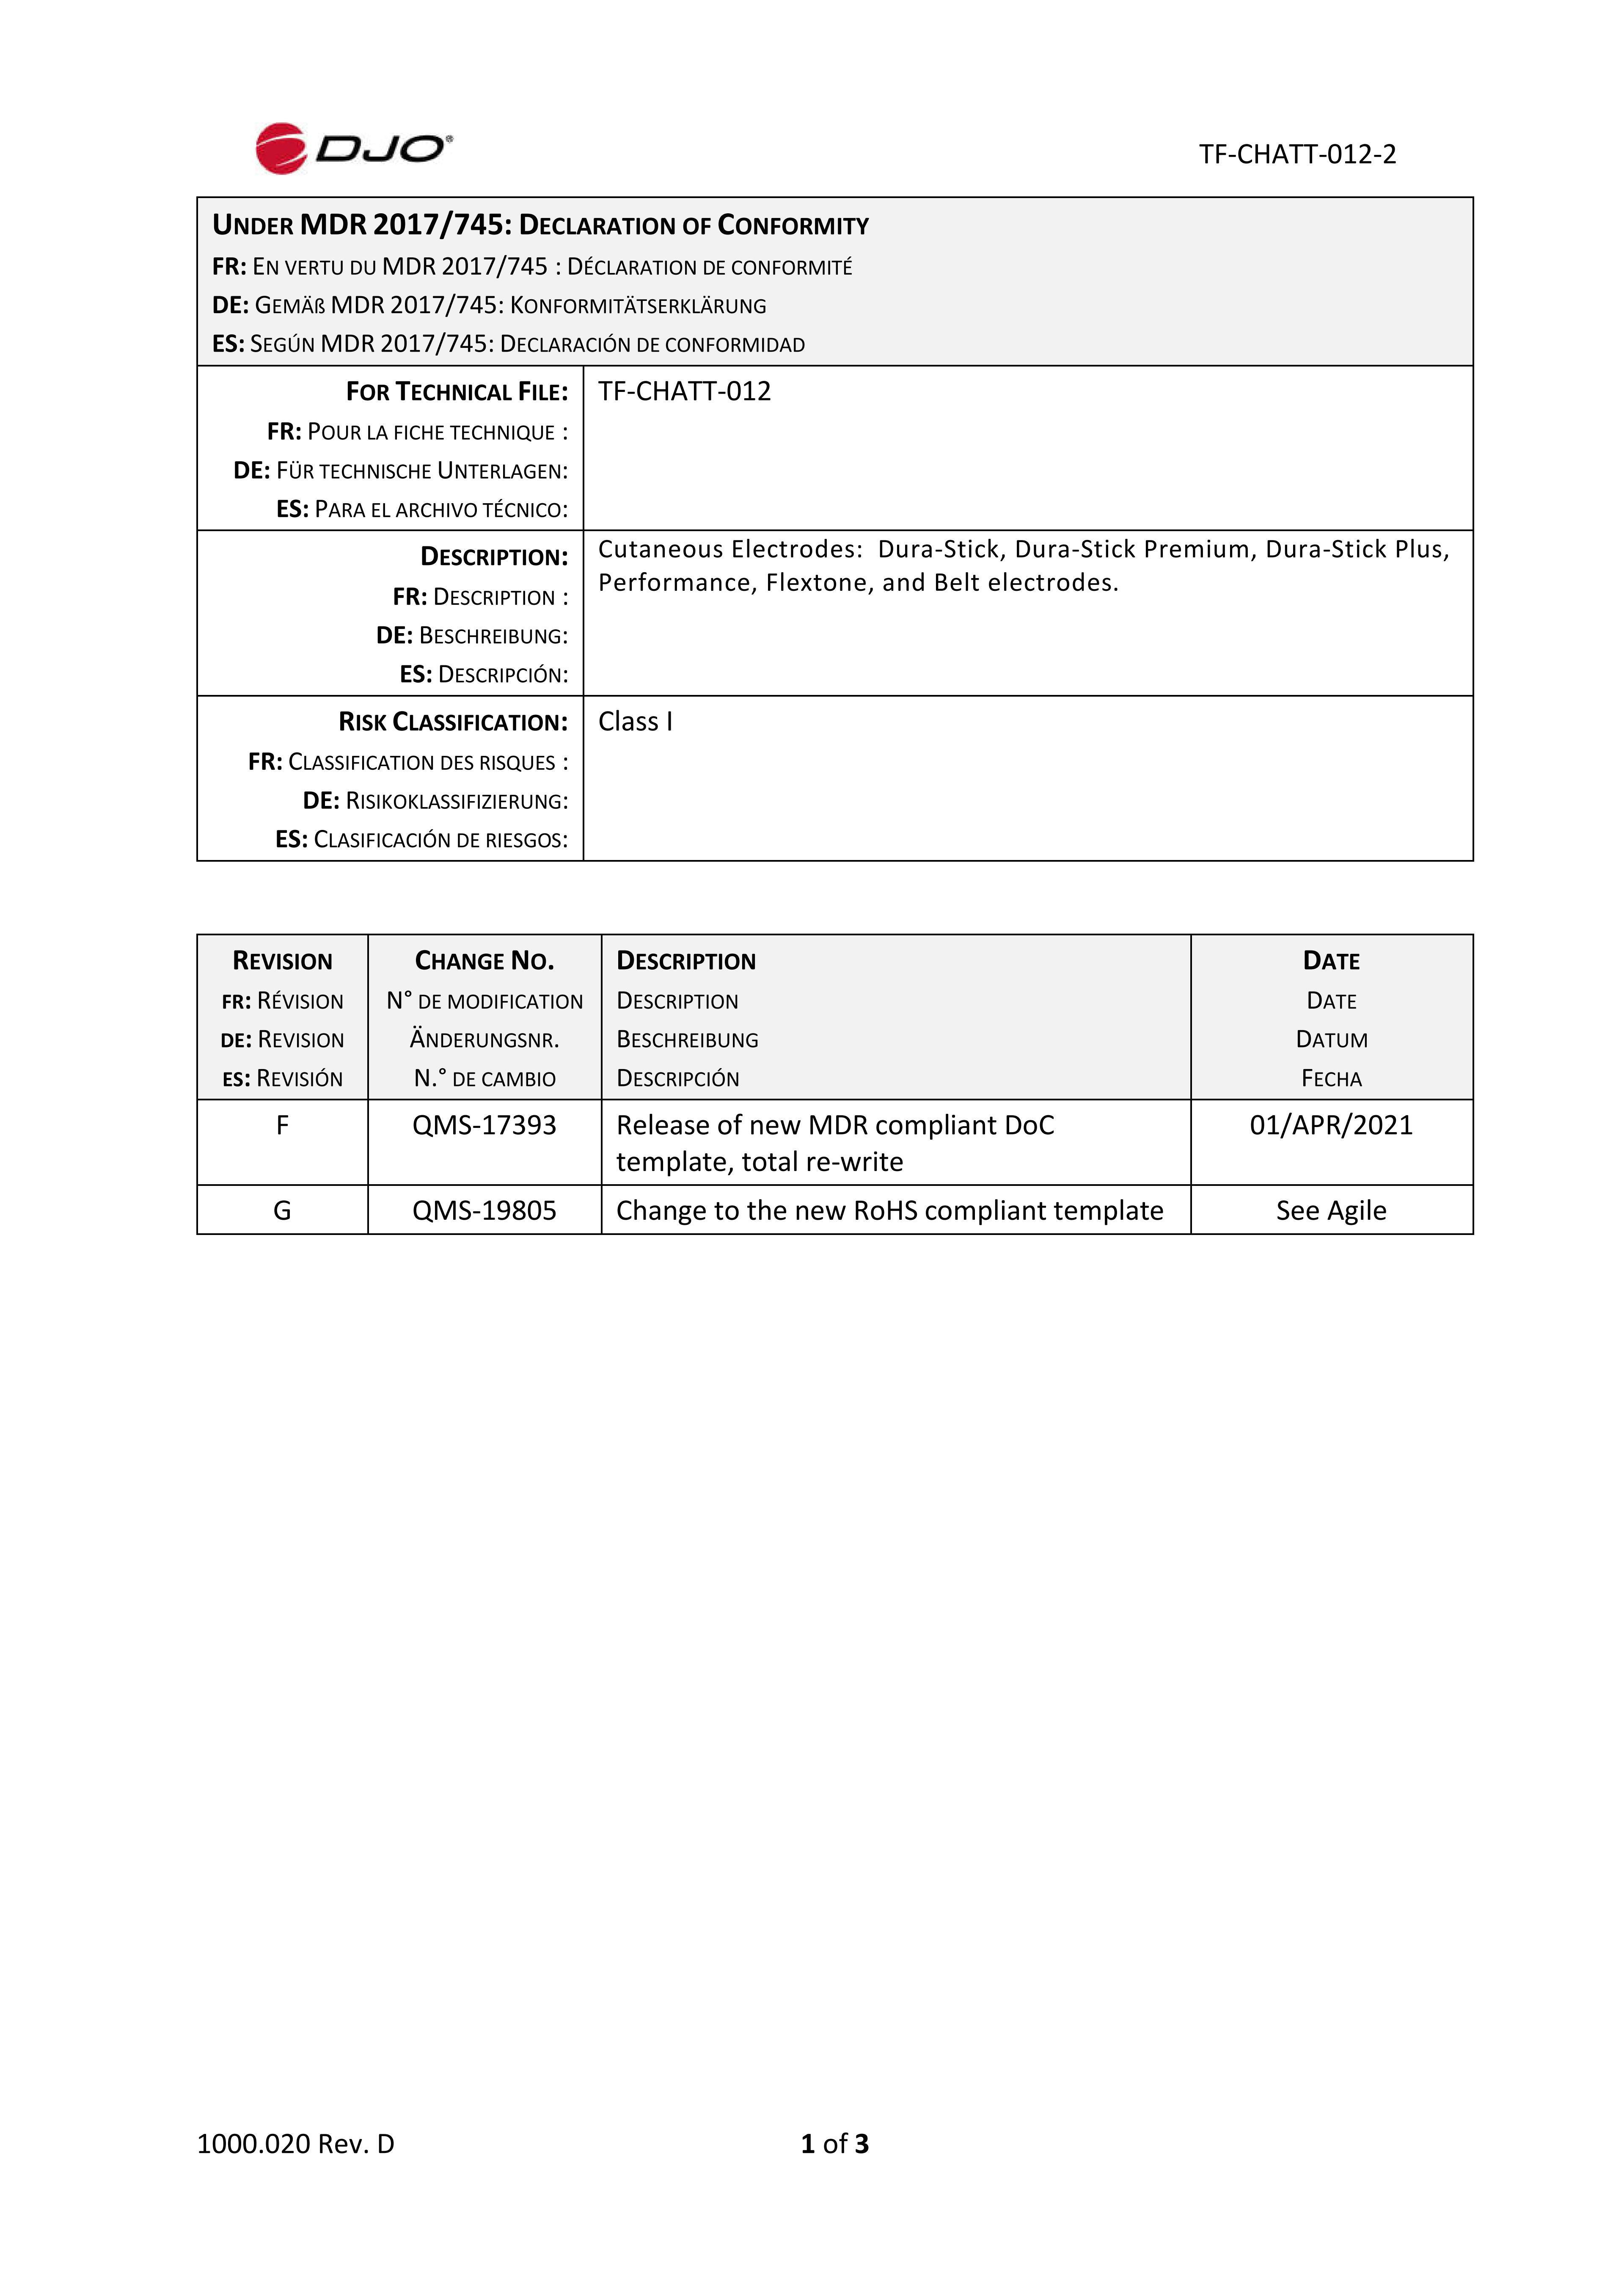 TF-CHATT-012-2_Electrodes Declaration of Conformity_Rev G.pdf